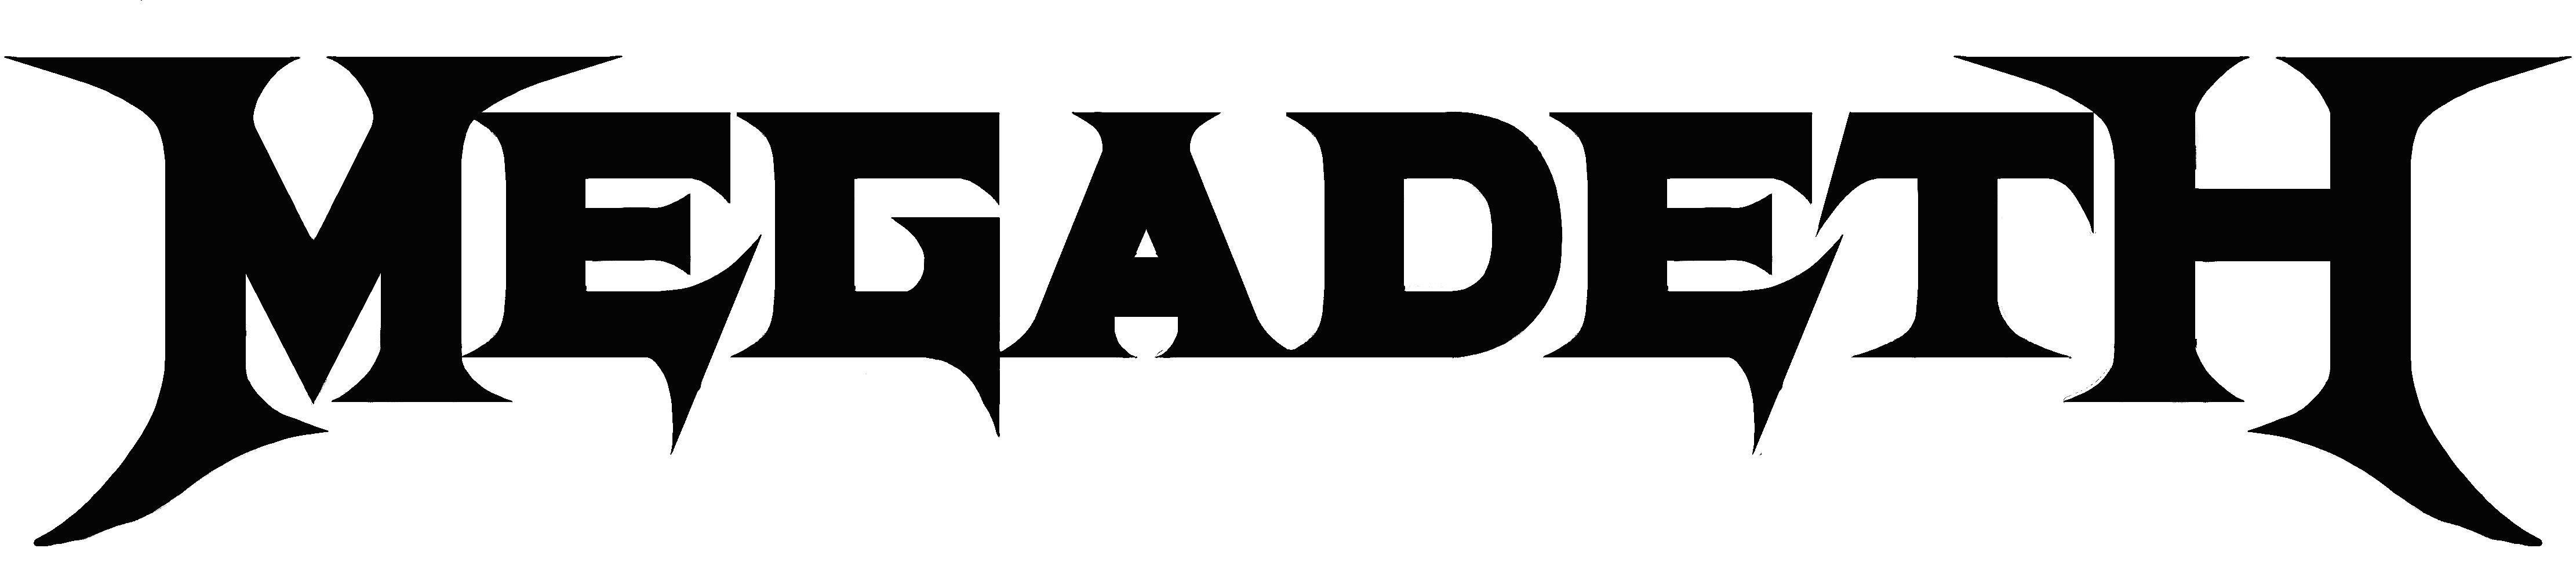 Megadeth Logo - Megadeth #band #logo | Band Logos | Band logos, Megadeth, Logos